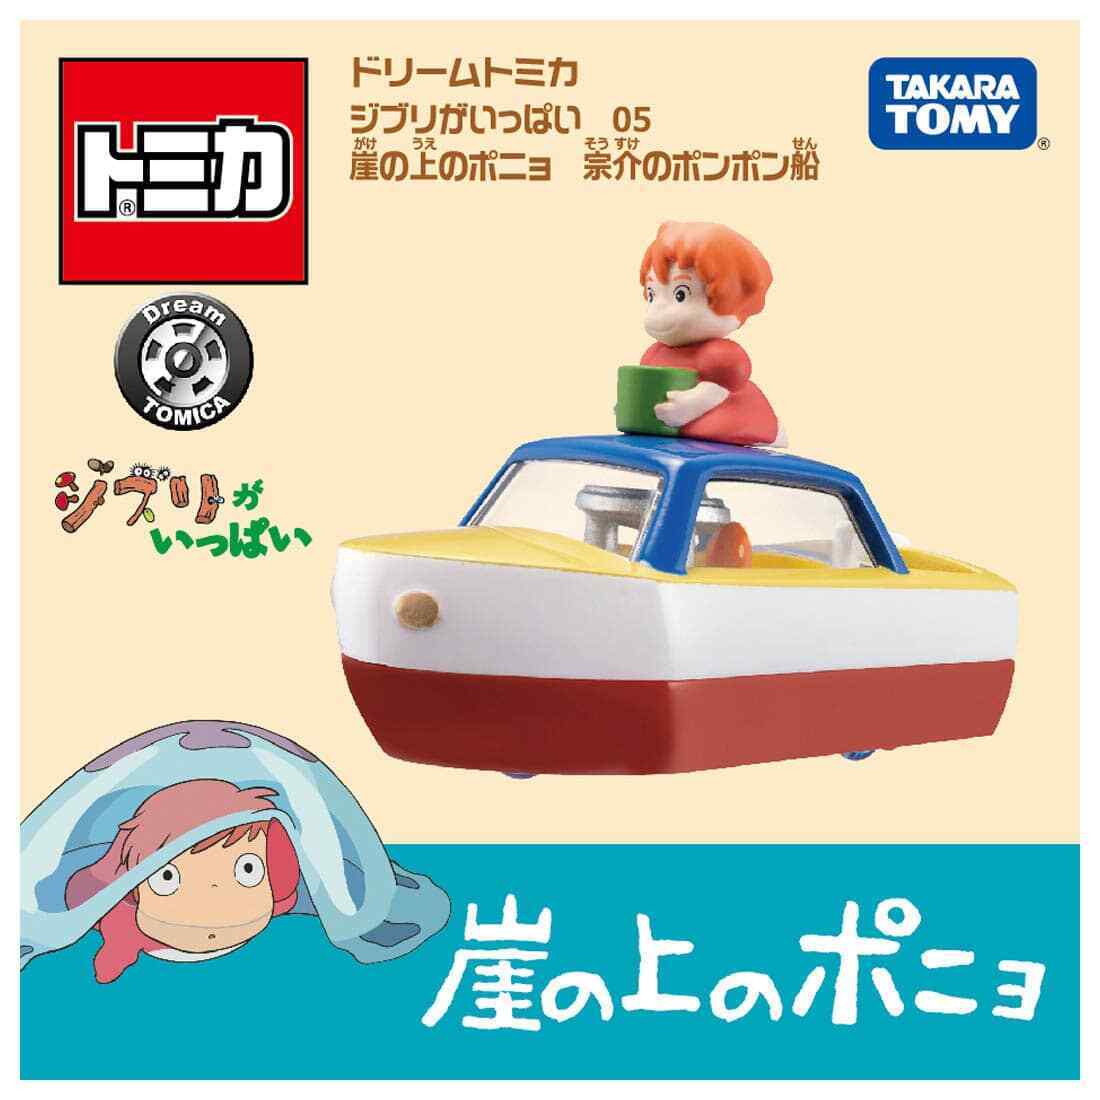 Takara Tomy Dream Tomica Studio Ghibli 05 Ponyo on the Cliff Die-cast Car